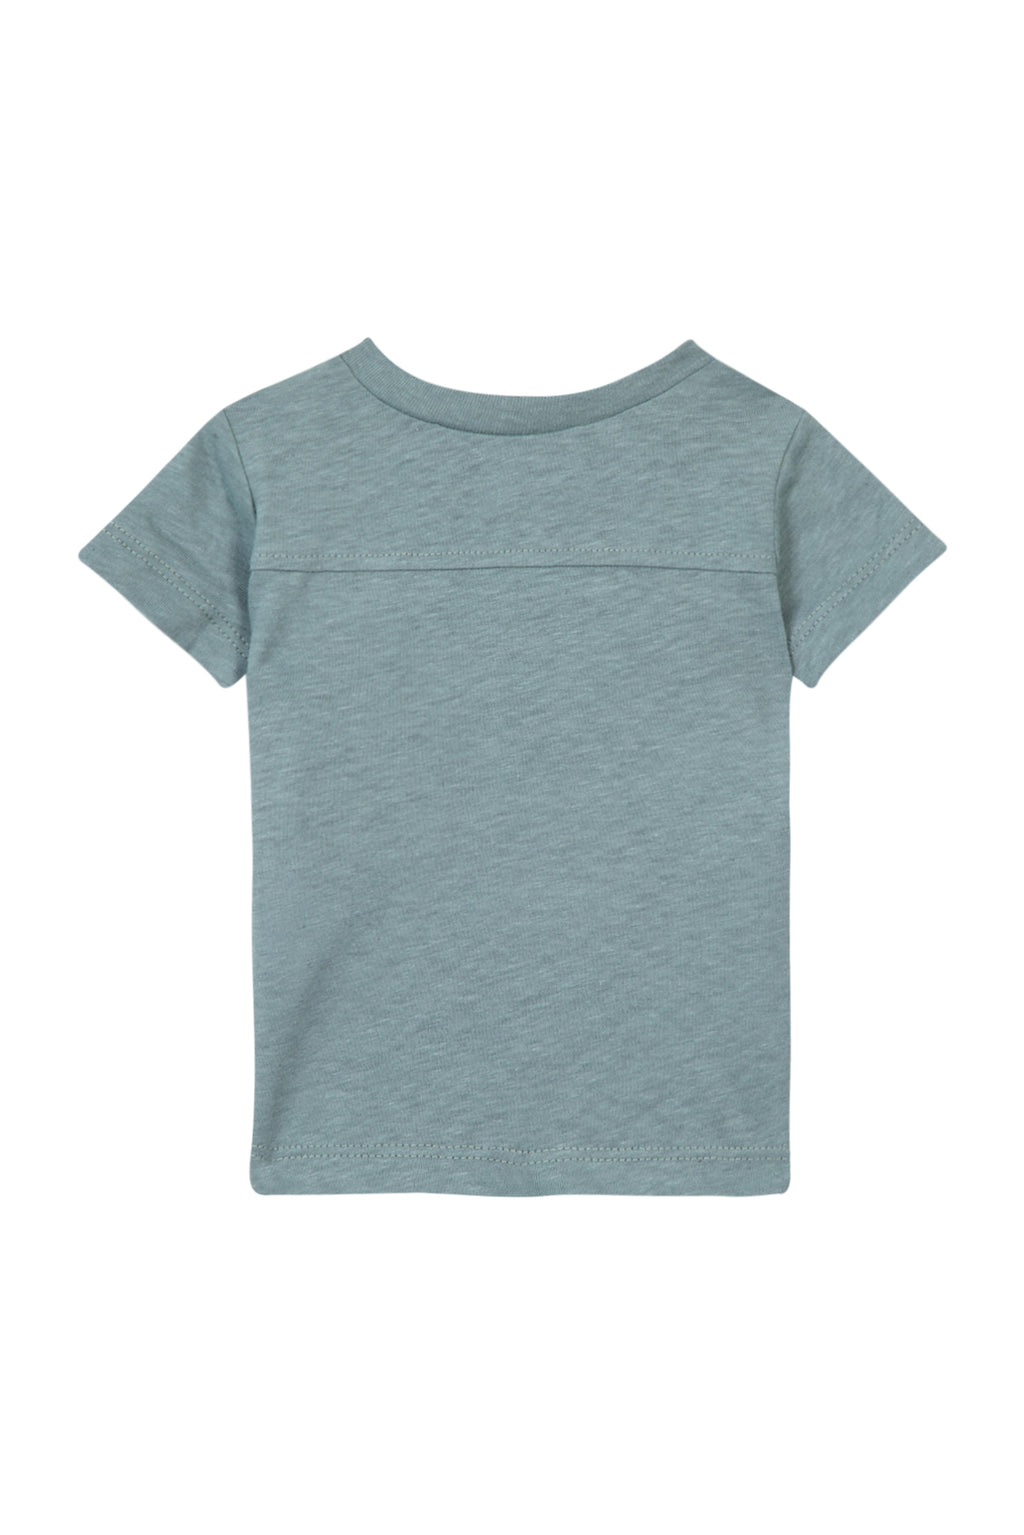 T-shirt - Green of Grey Illustration adventurer